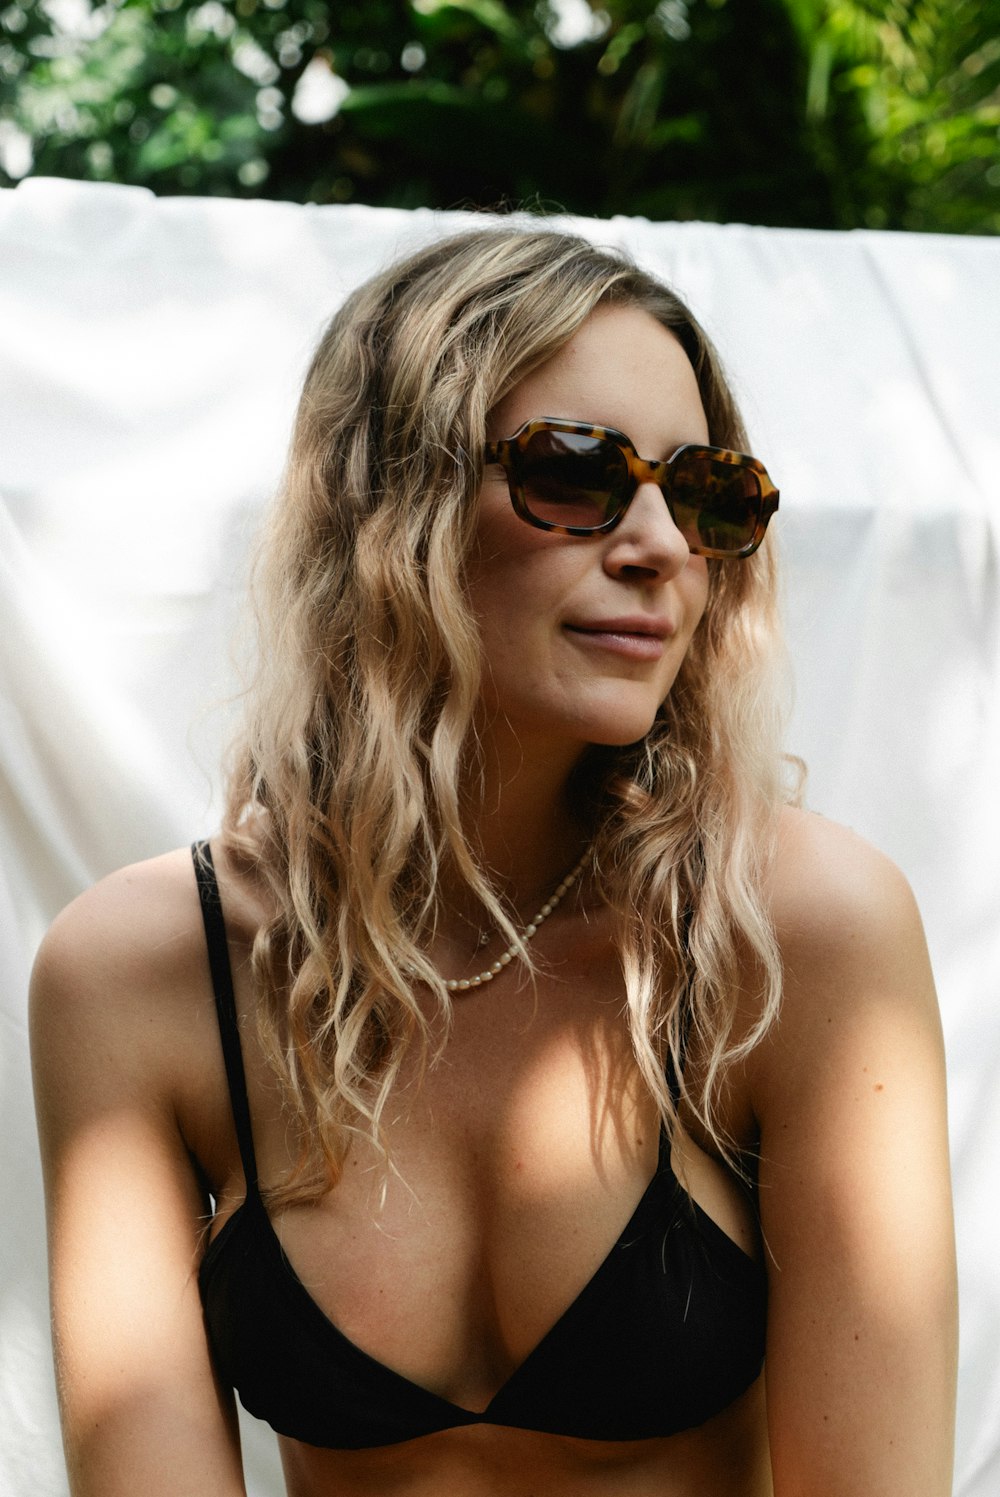 a woman in a black bikini top and sunglasses